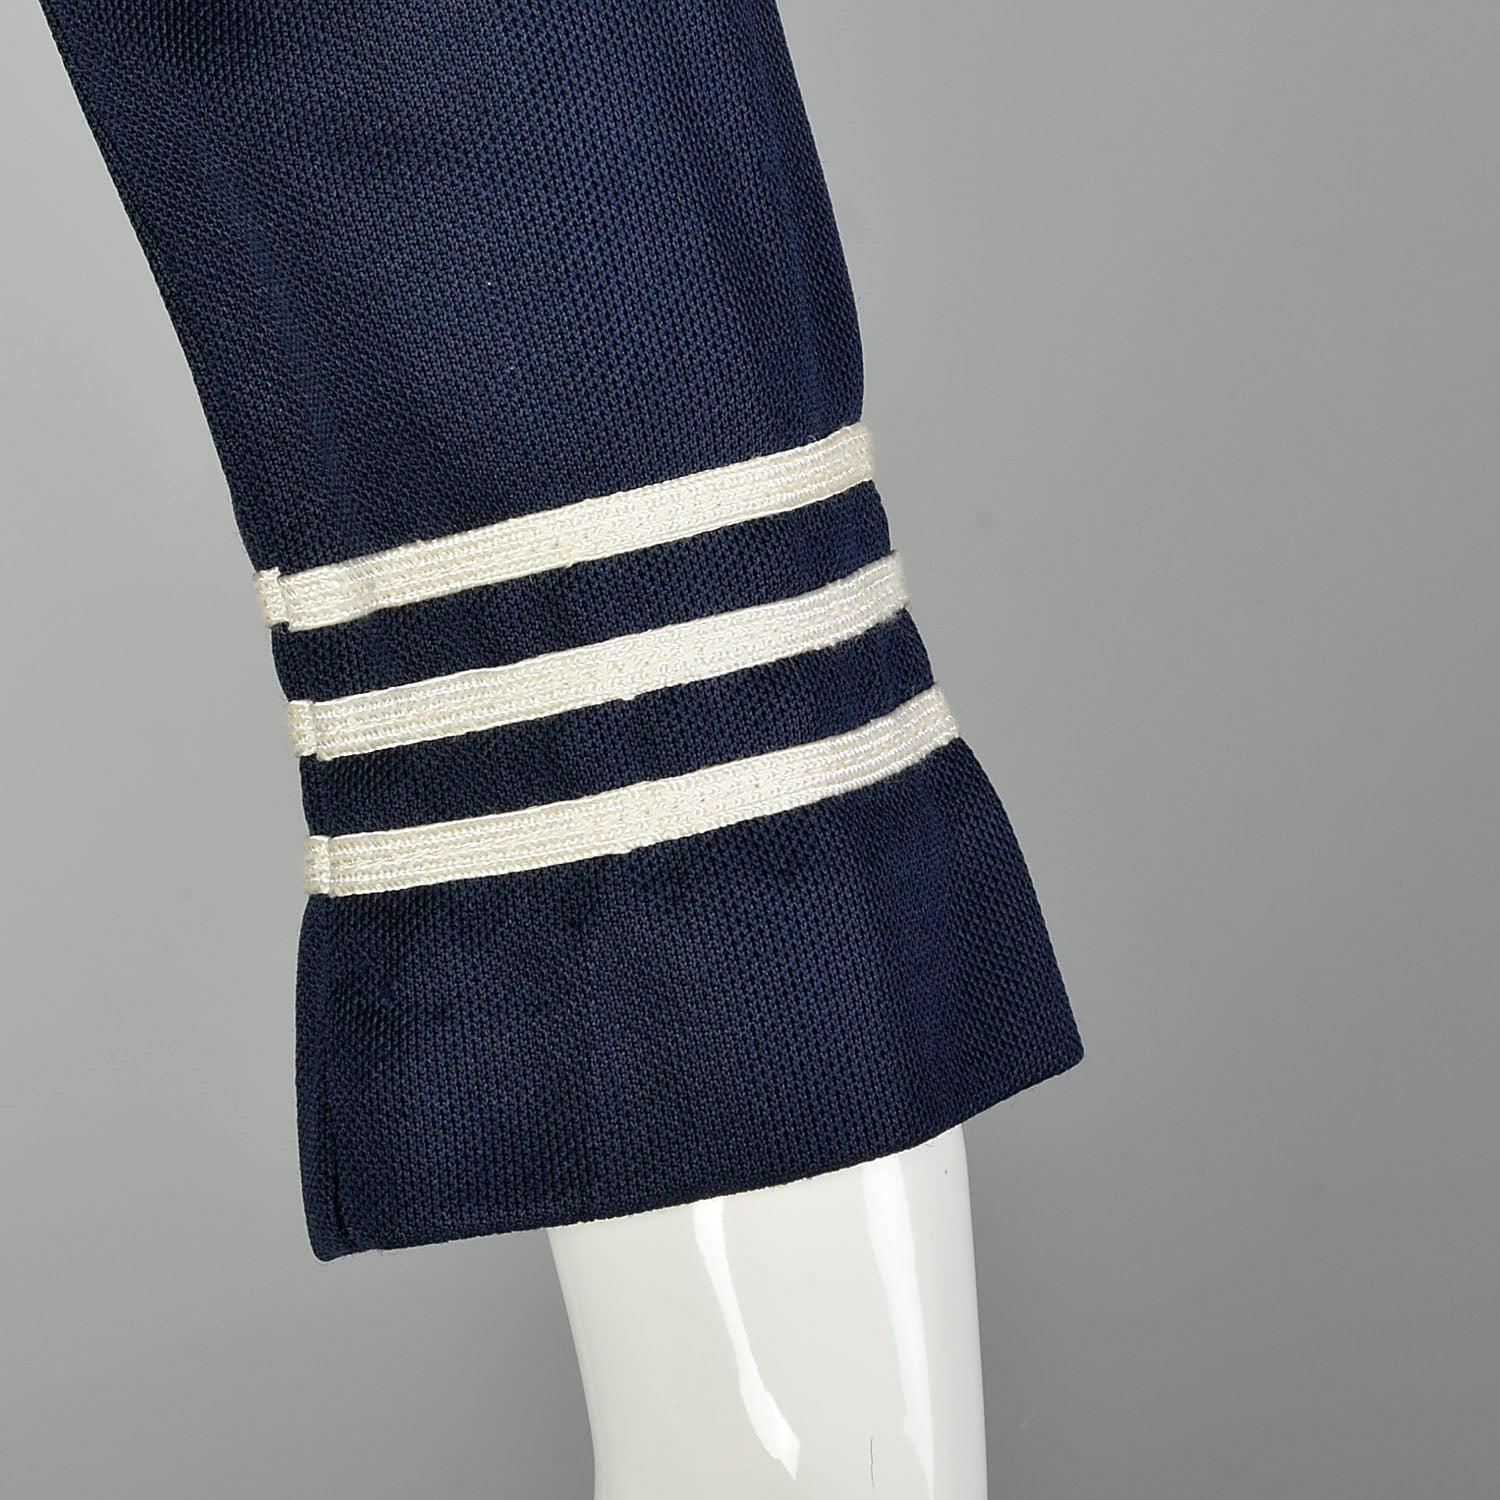 Small 1970s Sexy Sailor Dress Micro Mini Navy Blue Long Sleeves